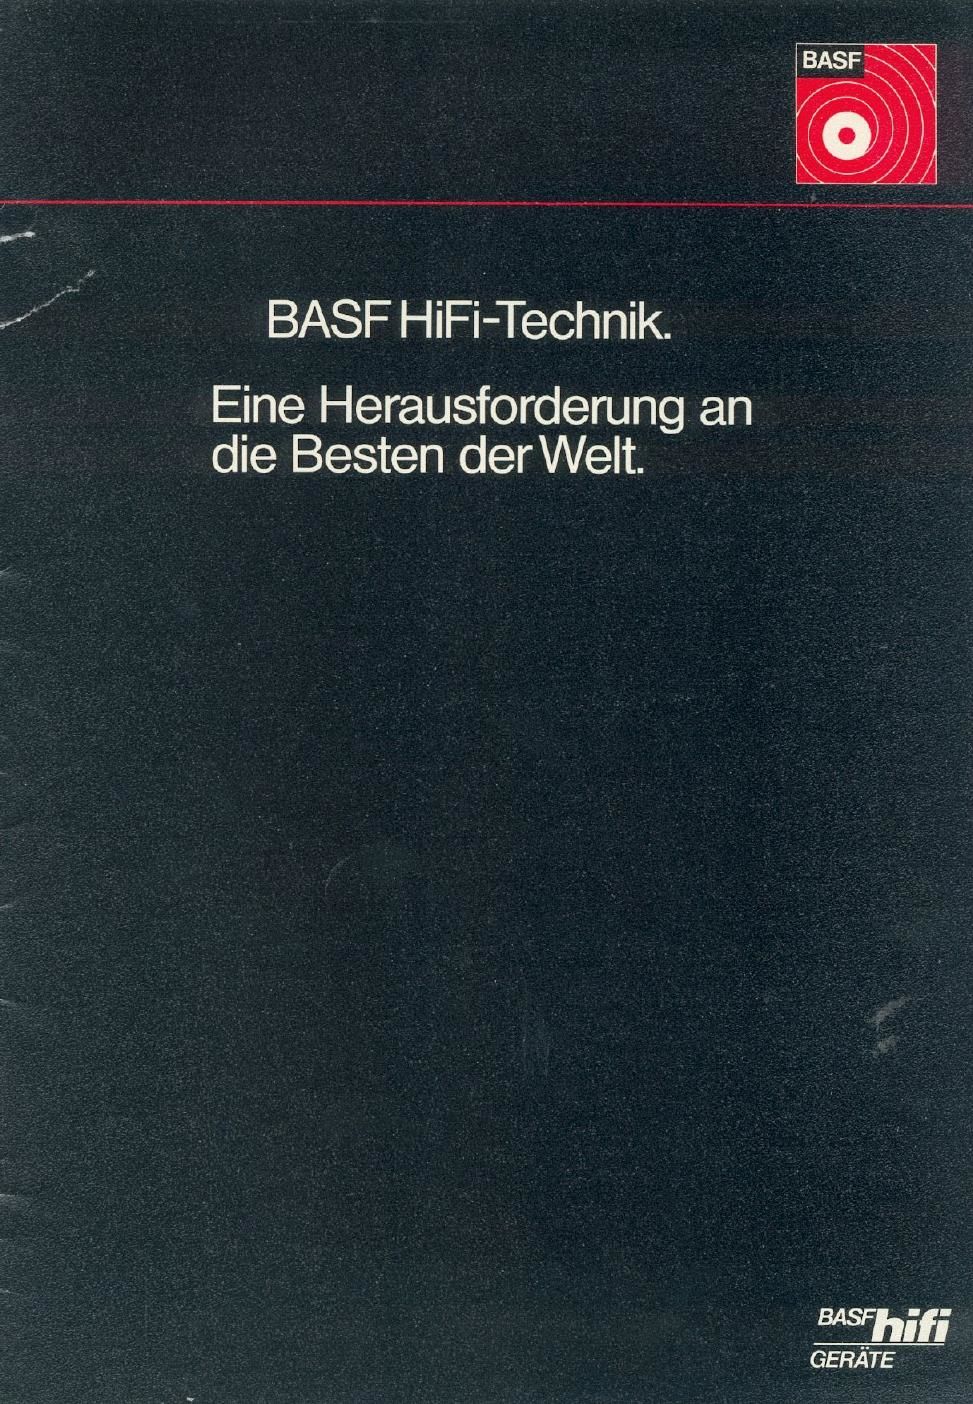 1978 BASF HiFi Programm